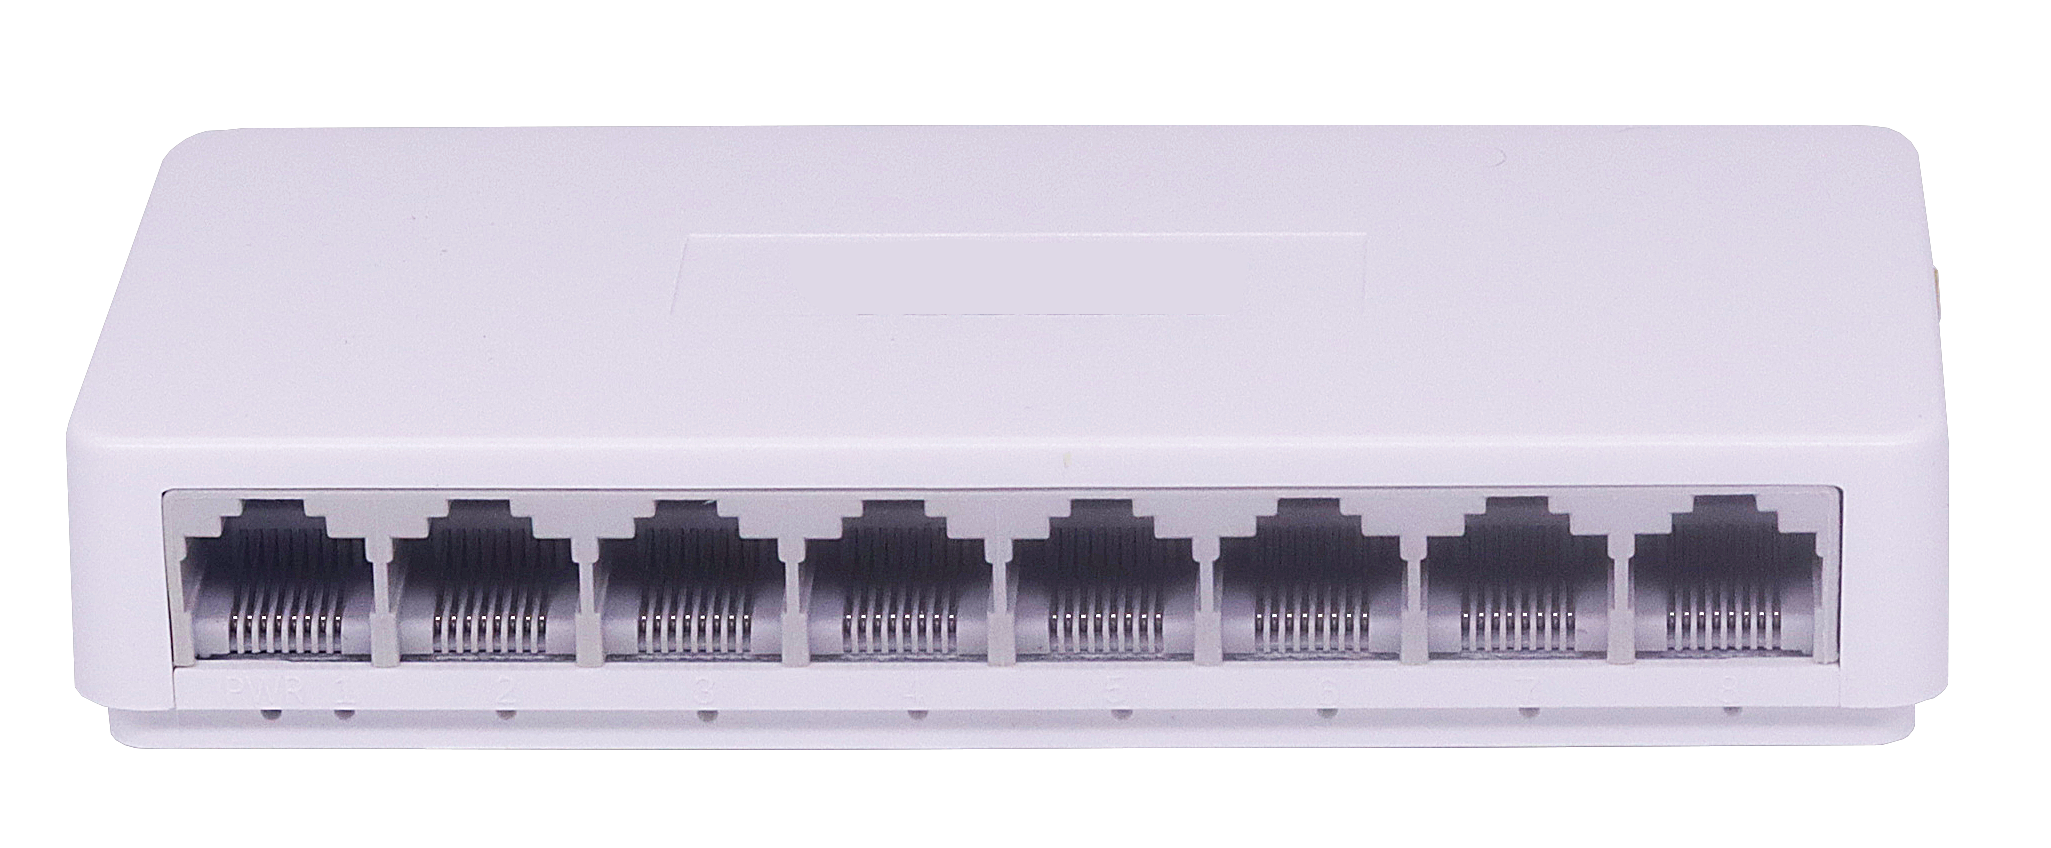 8 port Gigabit Ethernet switch Featured Image